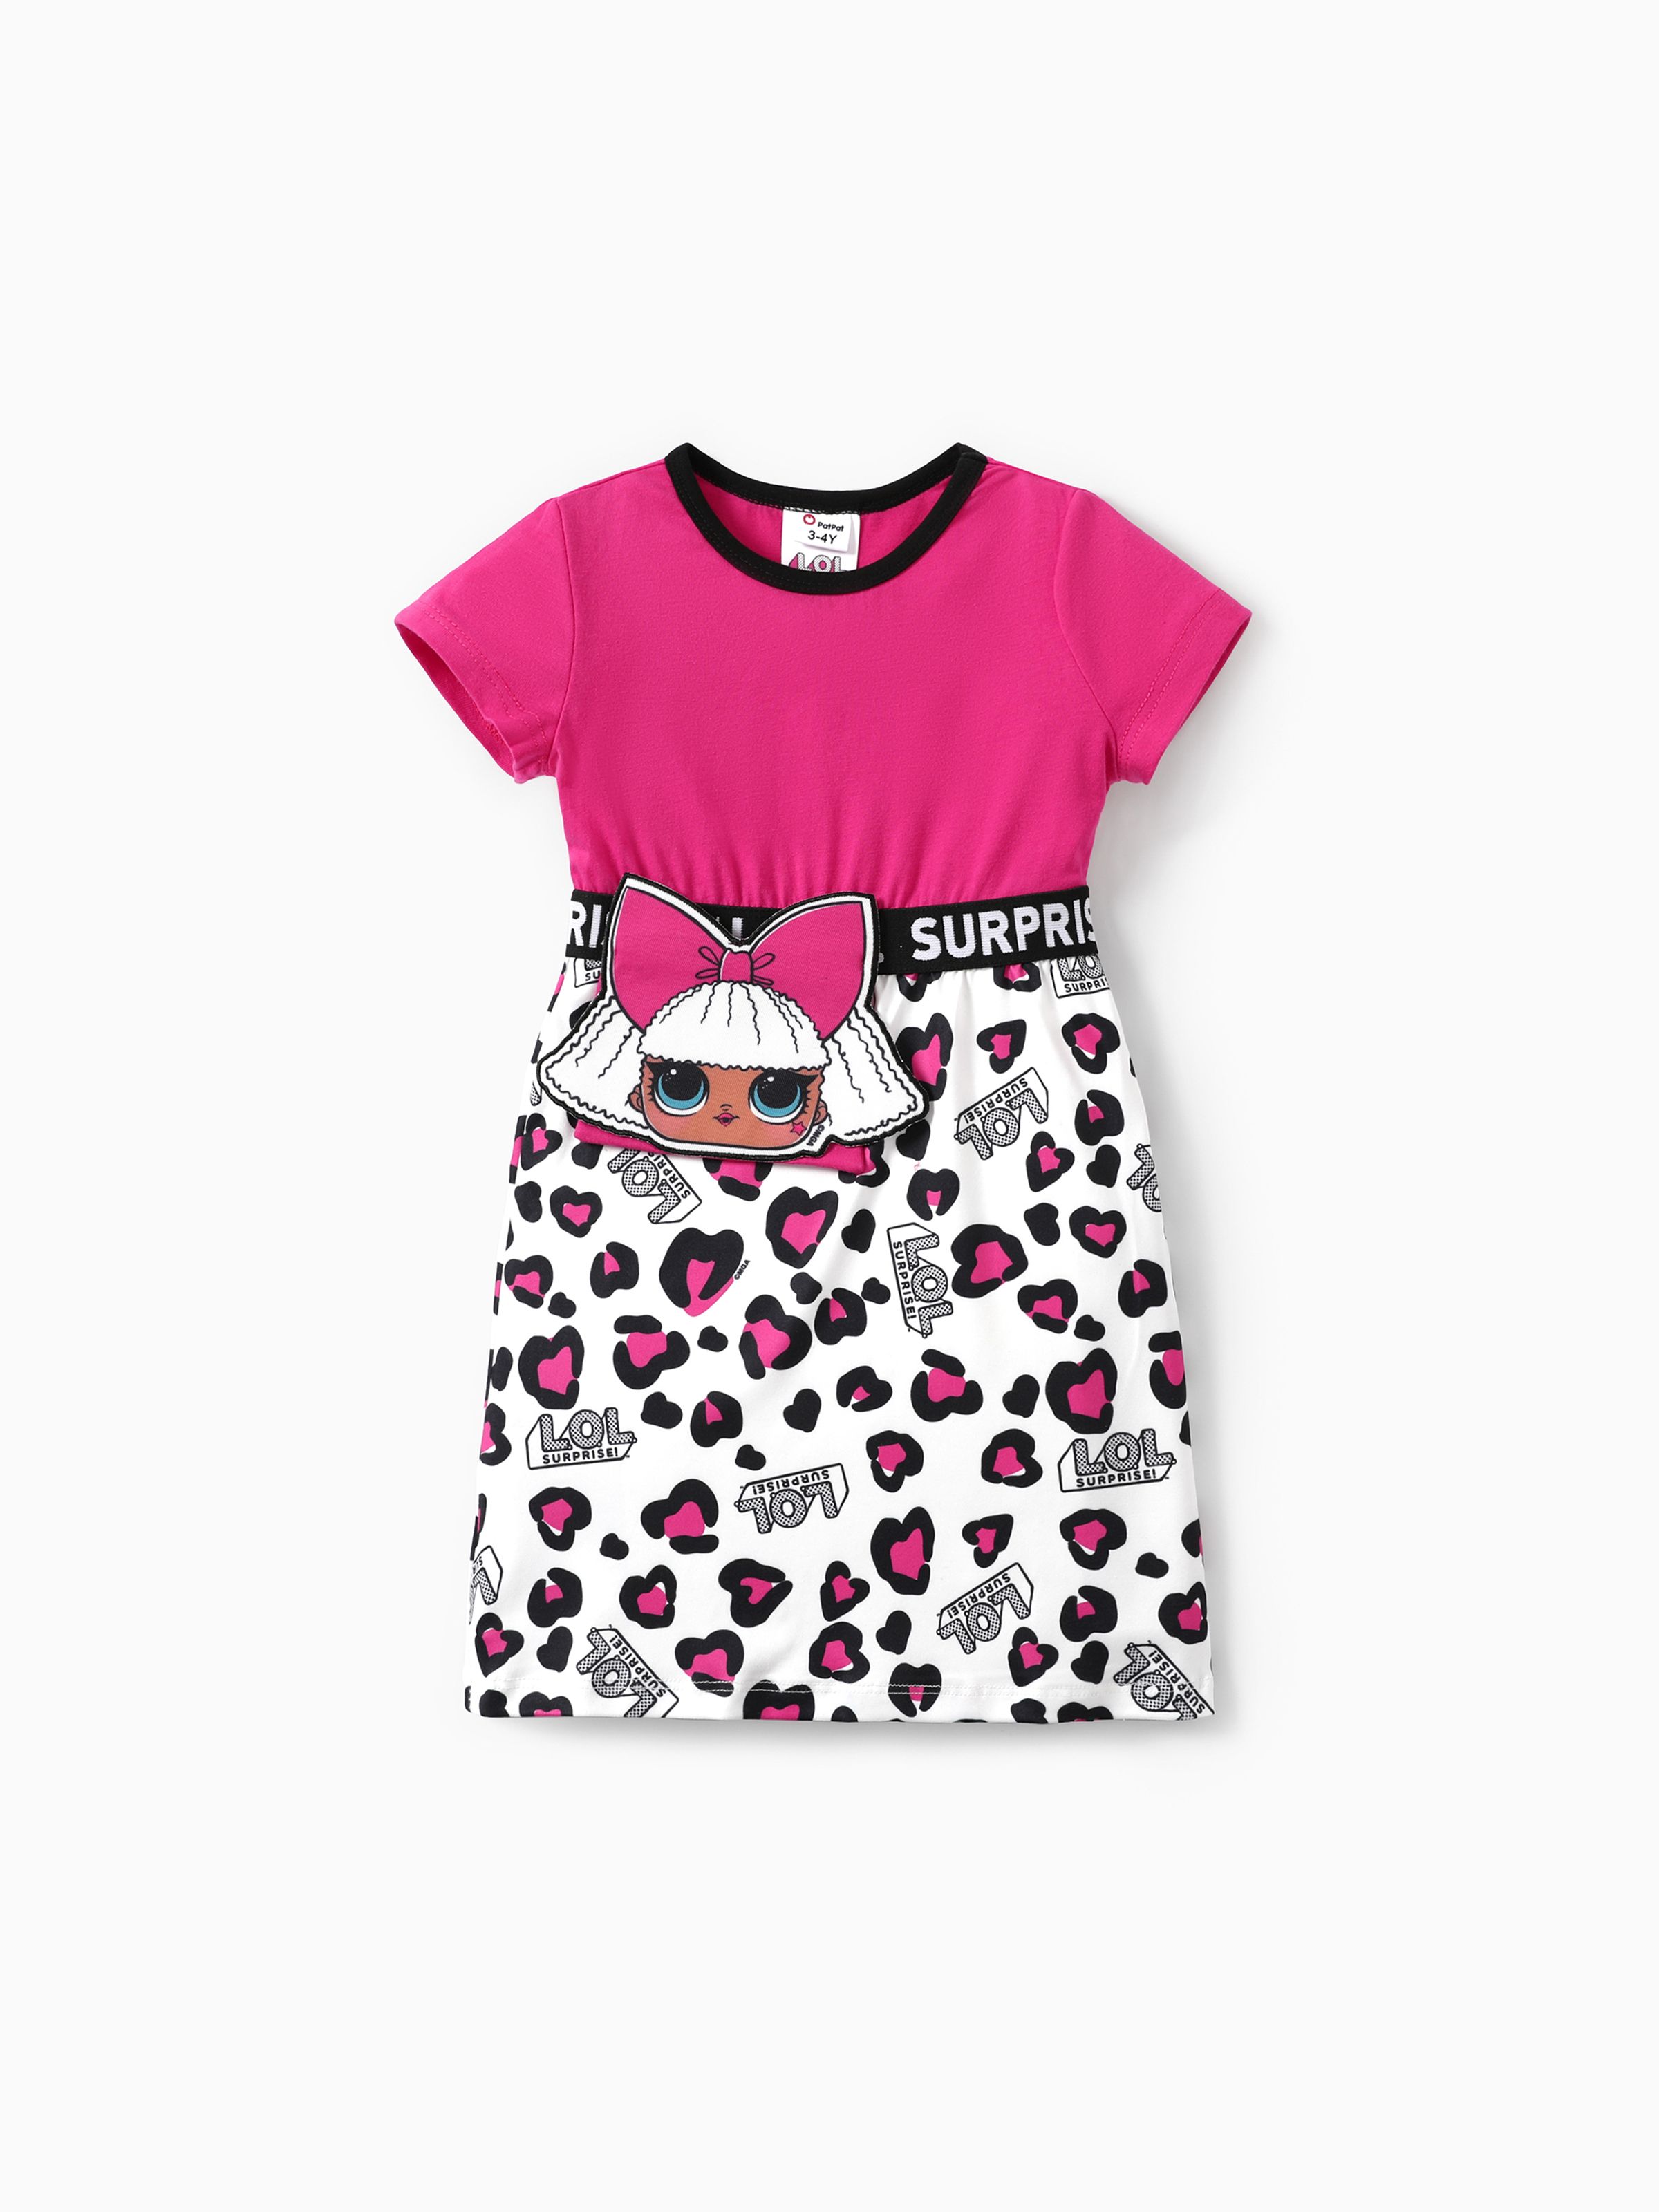 

LOL Surprise 1pc Toddler/Kids Girls Character Print Striped/ Leopard Dress"